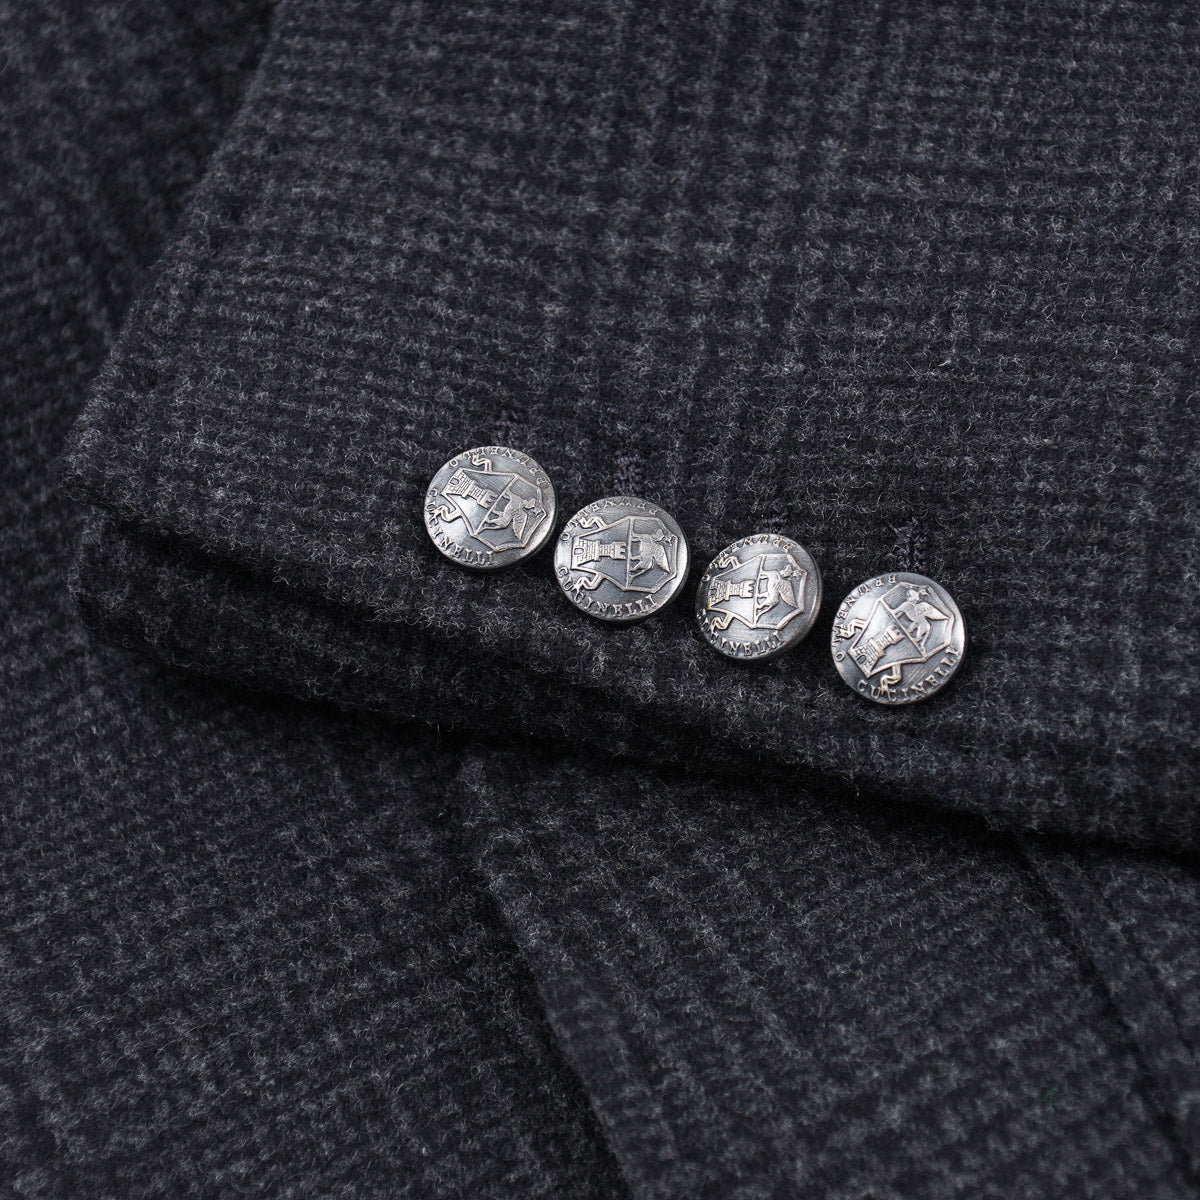 Brunello Cucinelli Slim-Fit Wool Overcoat - Top Shelf Apparel